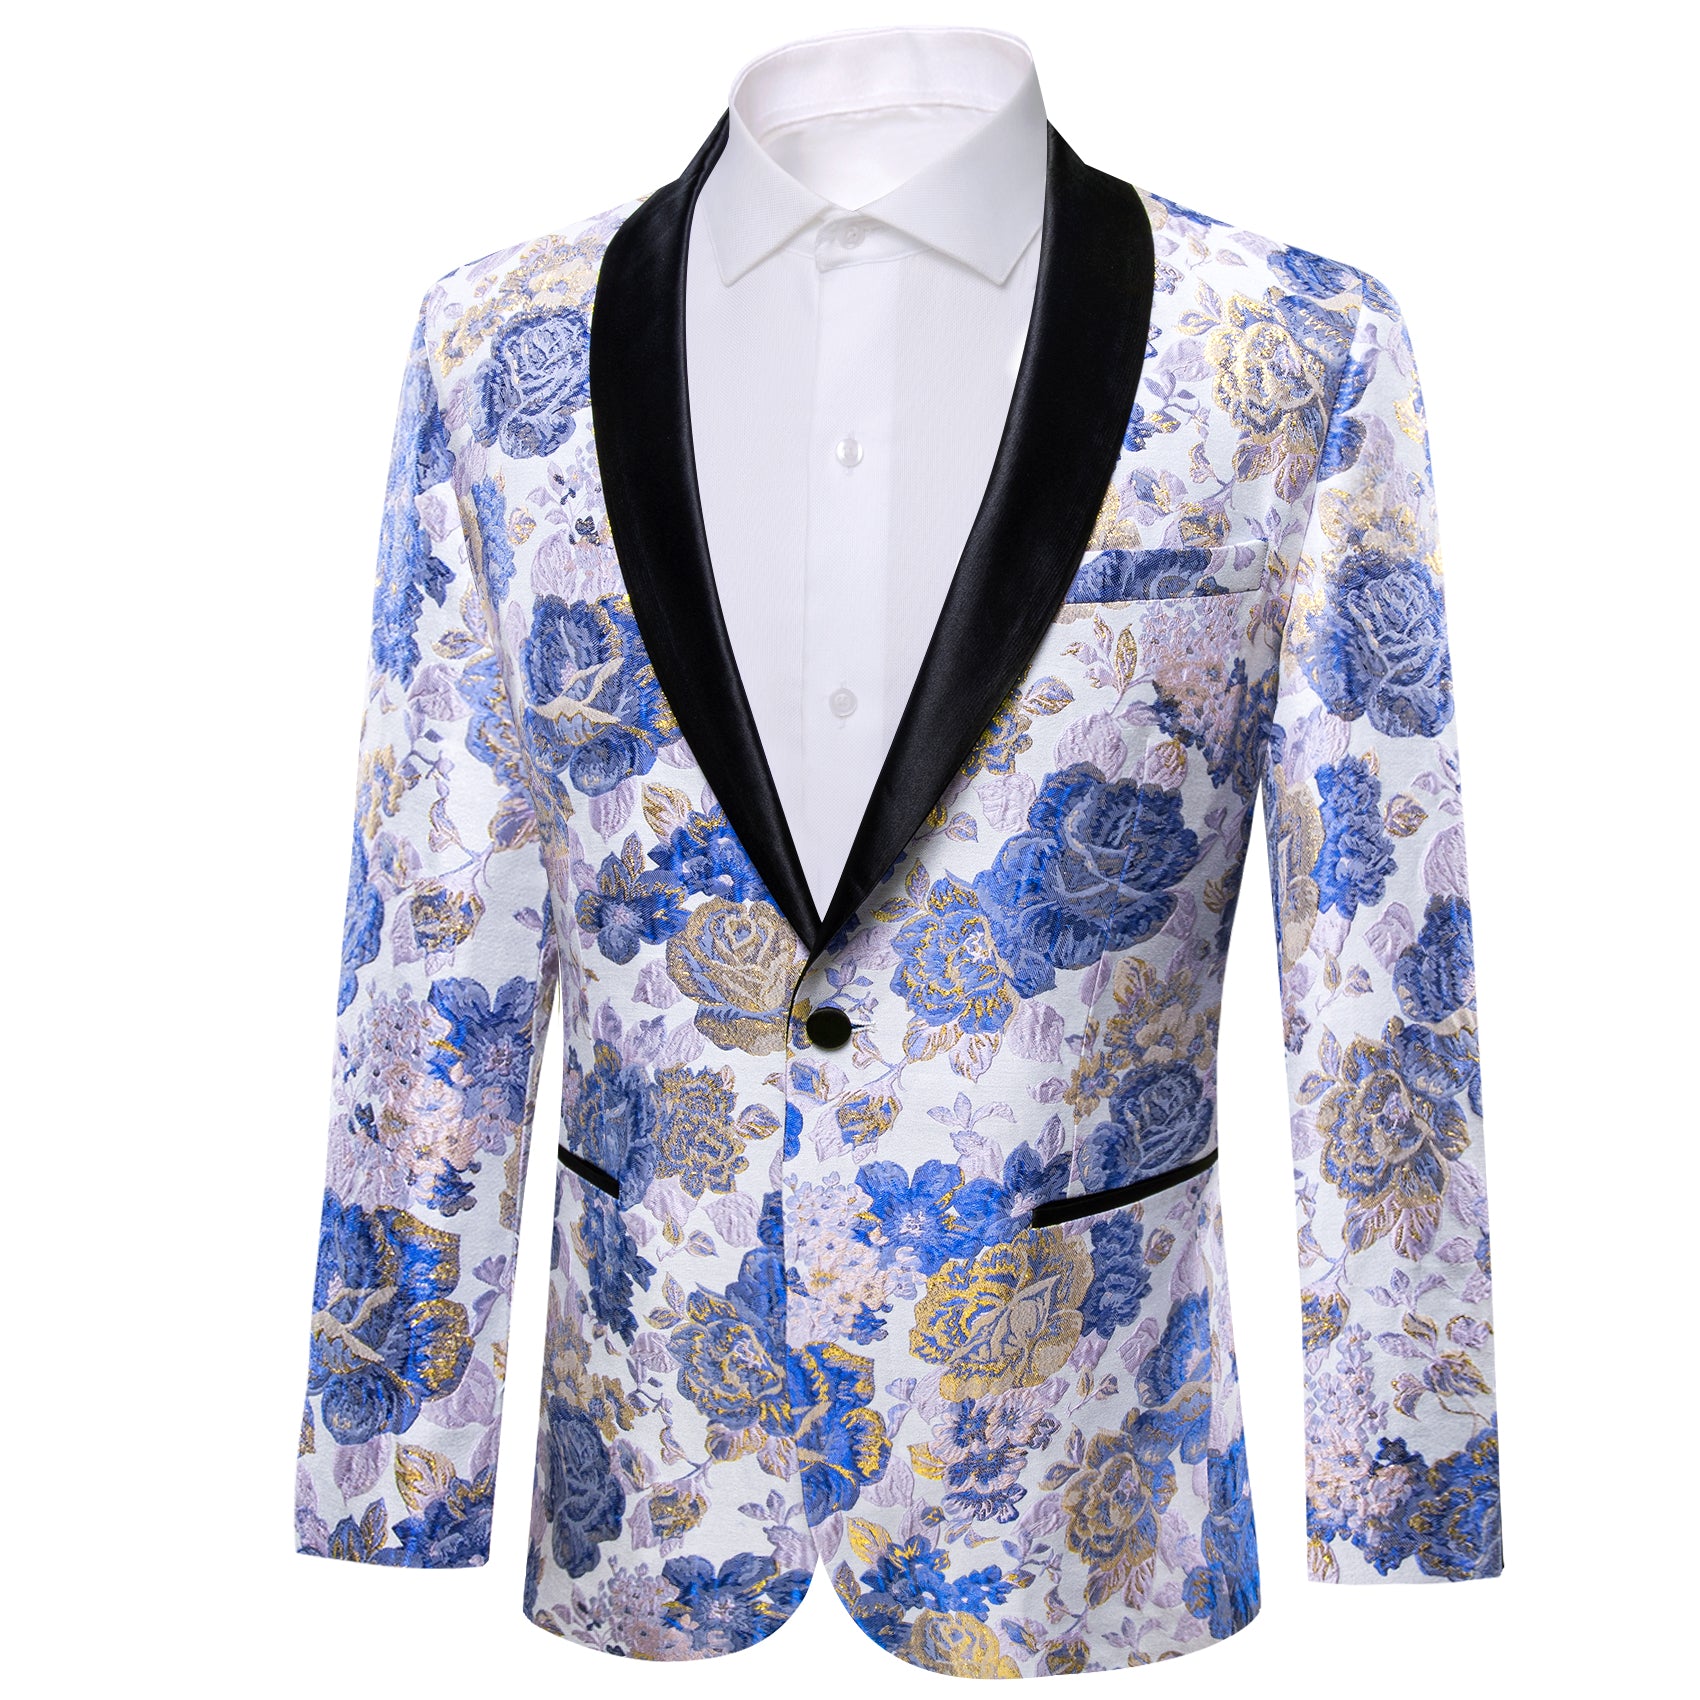 Men's Dress Party Blue White Flower Suit Jacket Slim One Button Stylish Blazer